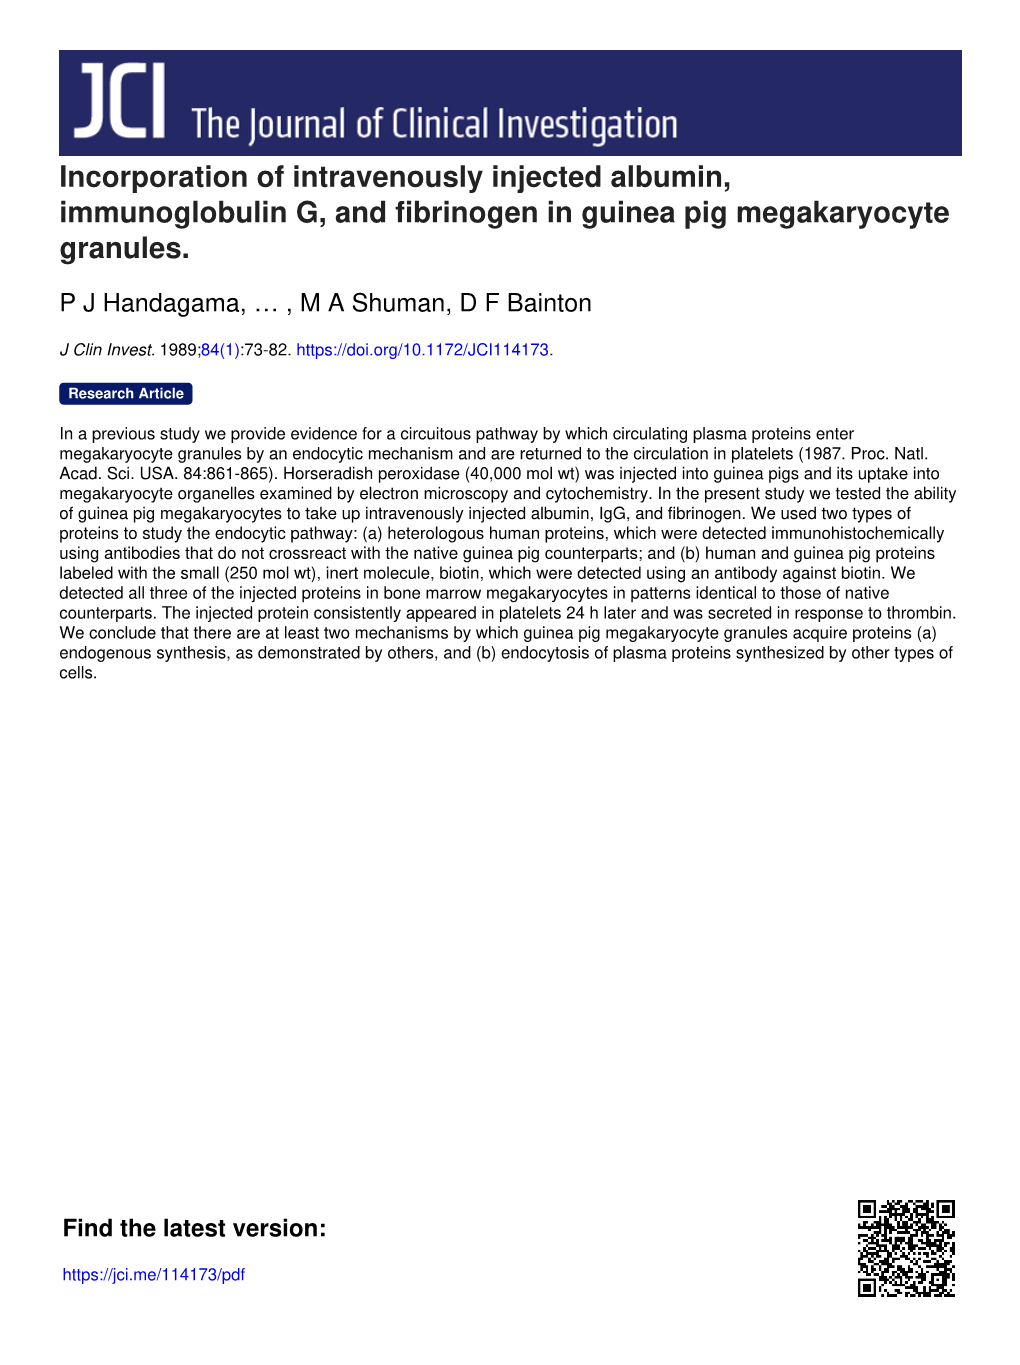 Incorporation of Intravenously Injected Albumin, Immunoglobulin G, and Fibrinogen in Guinea Pig Megakaryocyte Granules